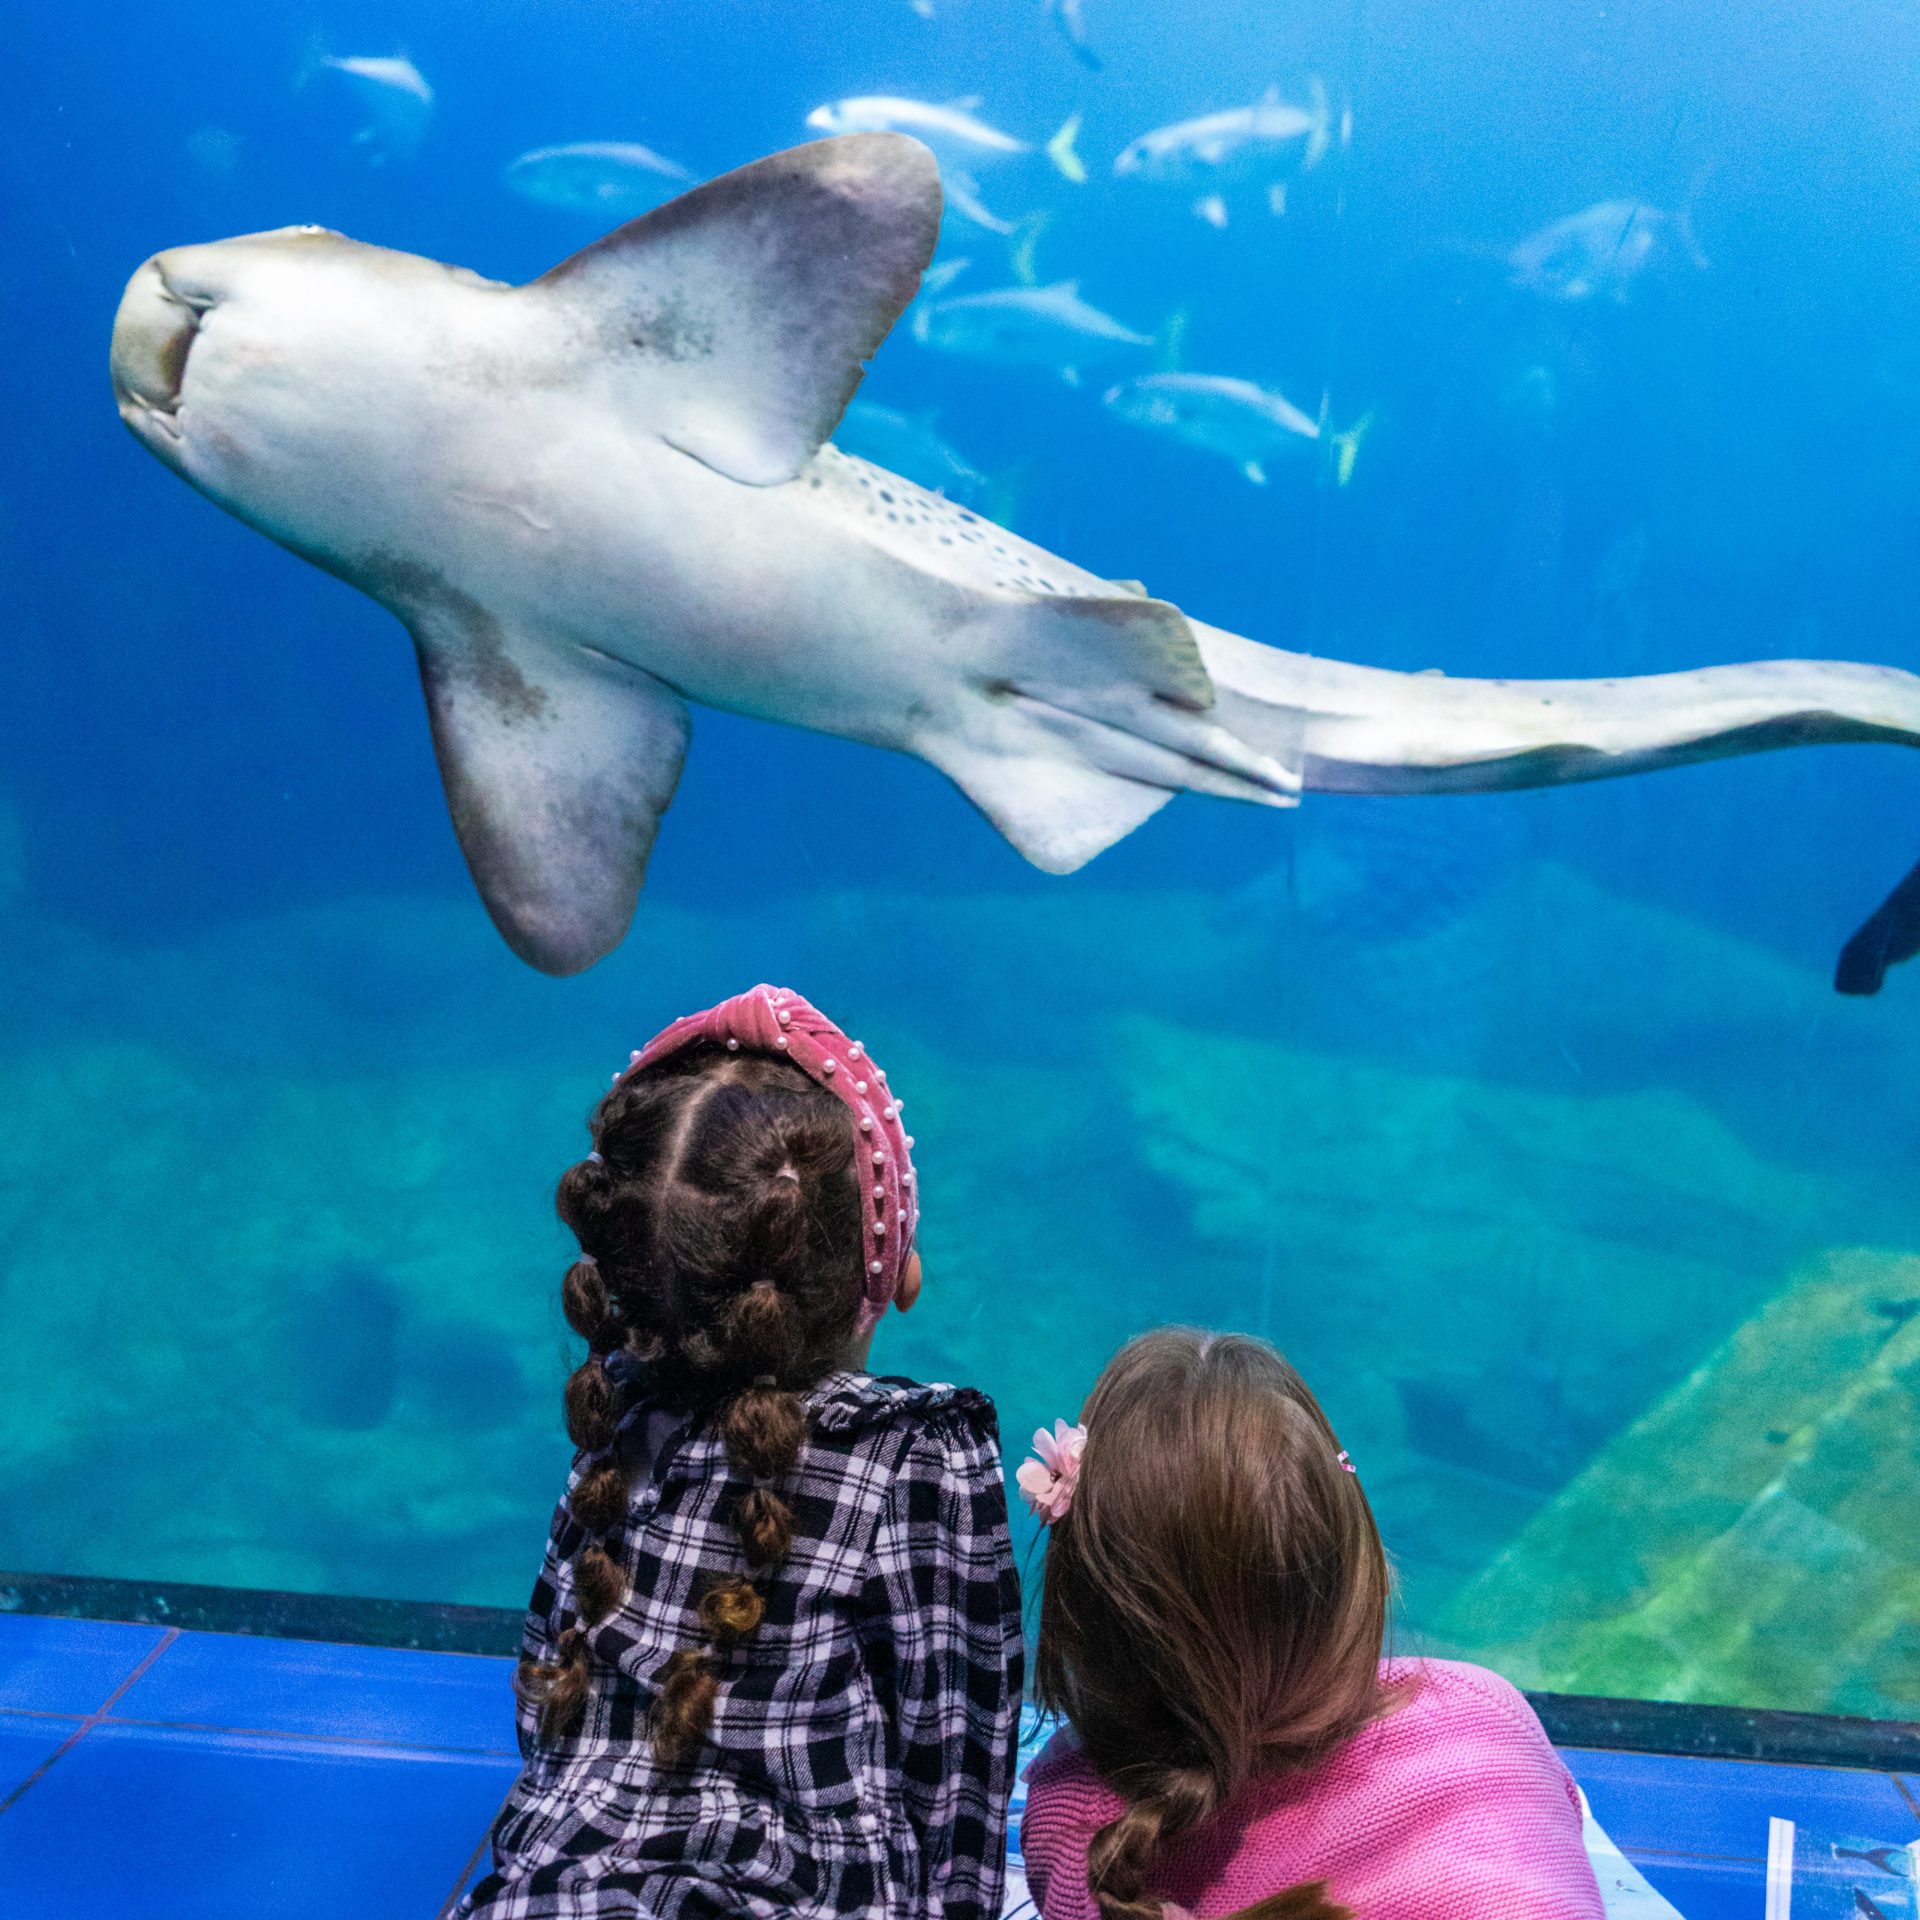 Home education children observing a shark. 